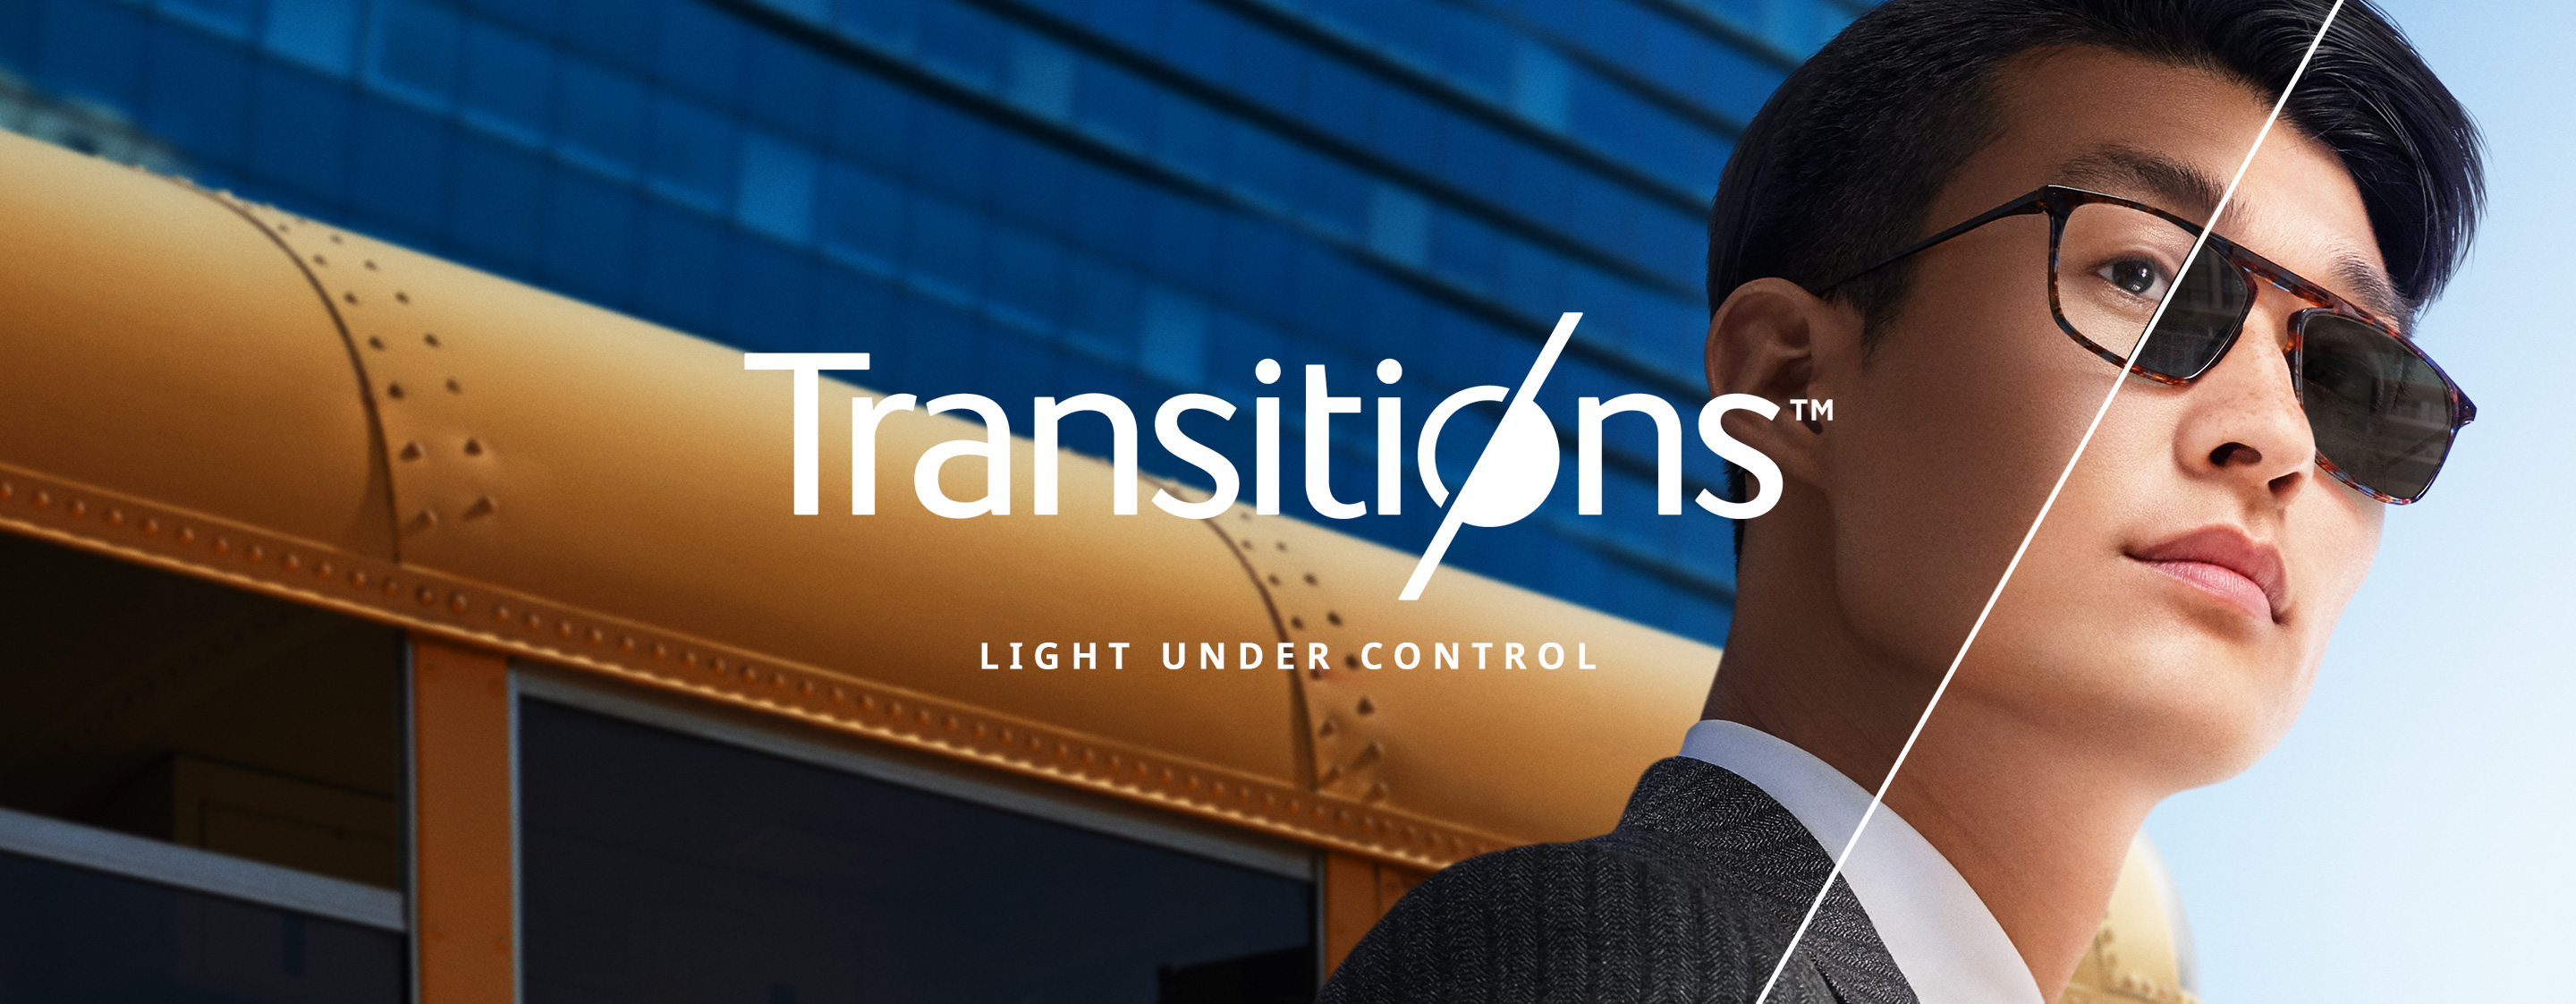 transitions light under control